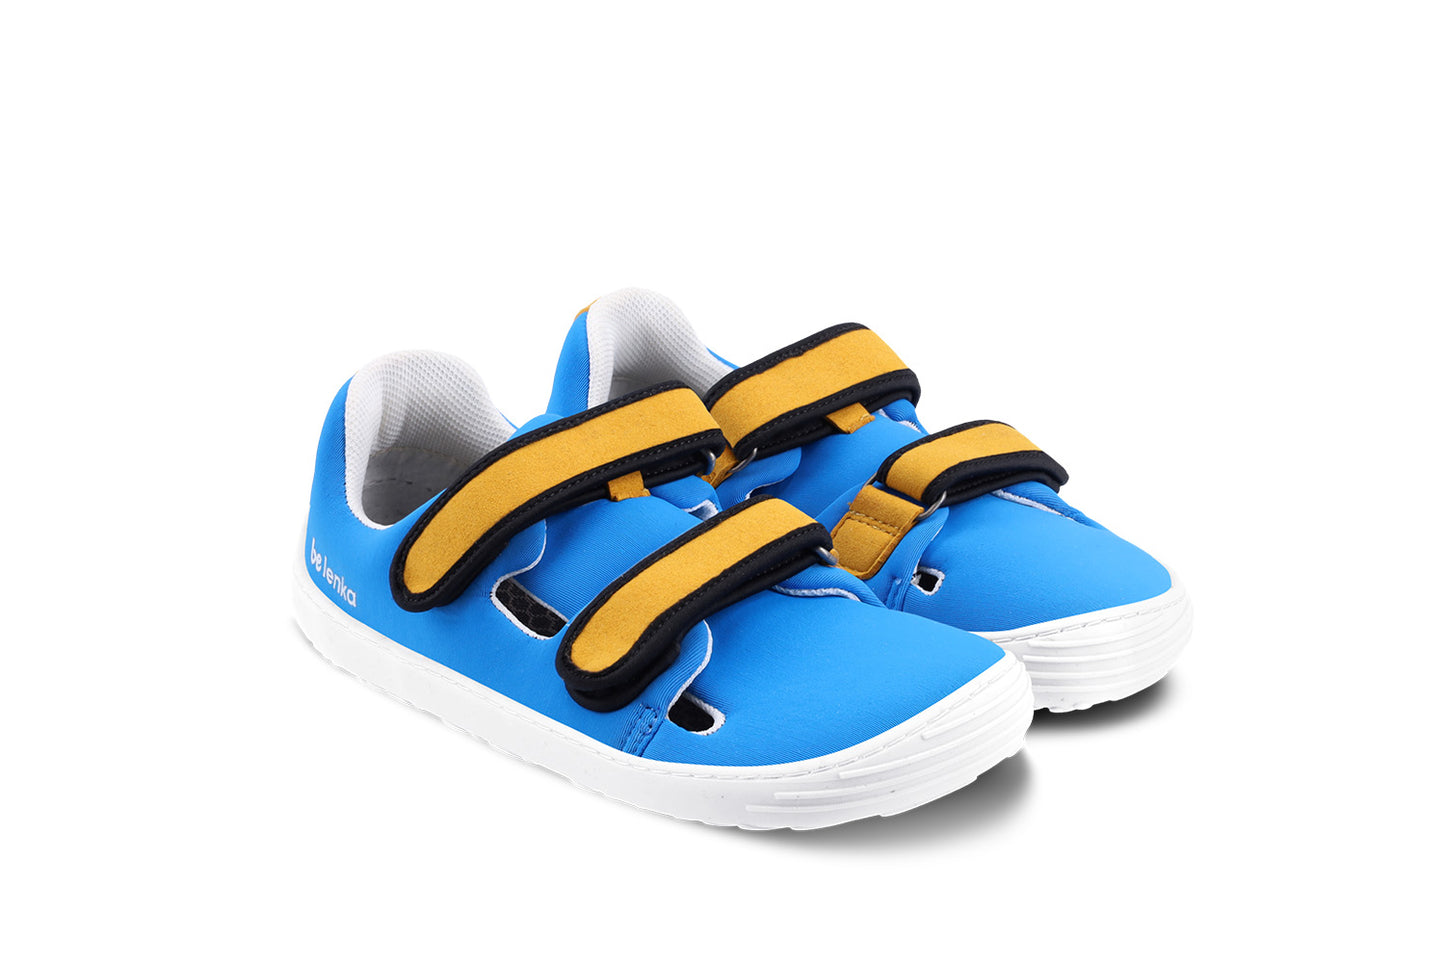 Be Lenka Seasiders Kids' Barefoot Shoes - Bluelicious